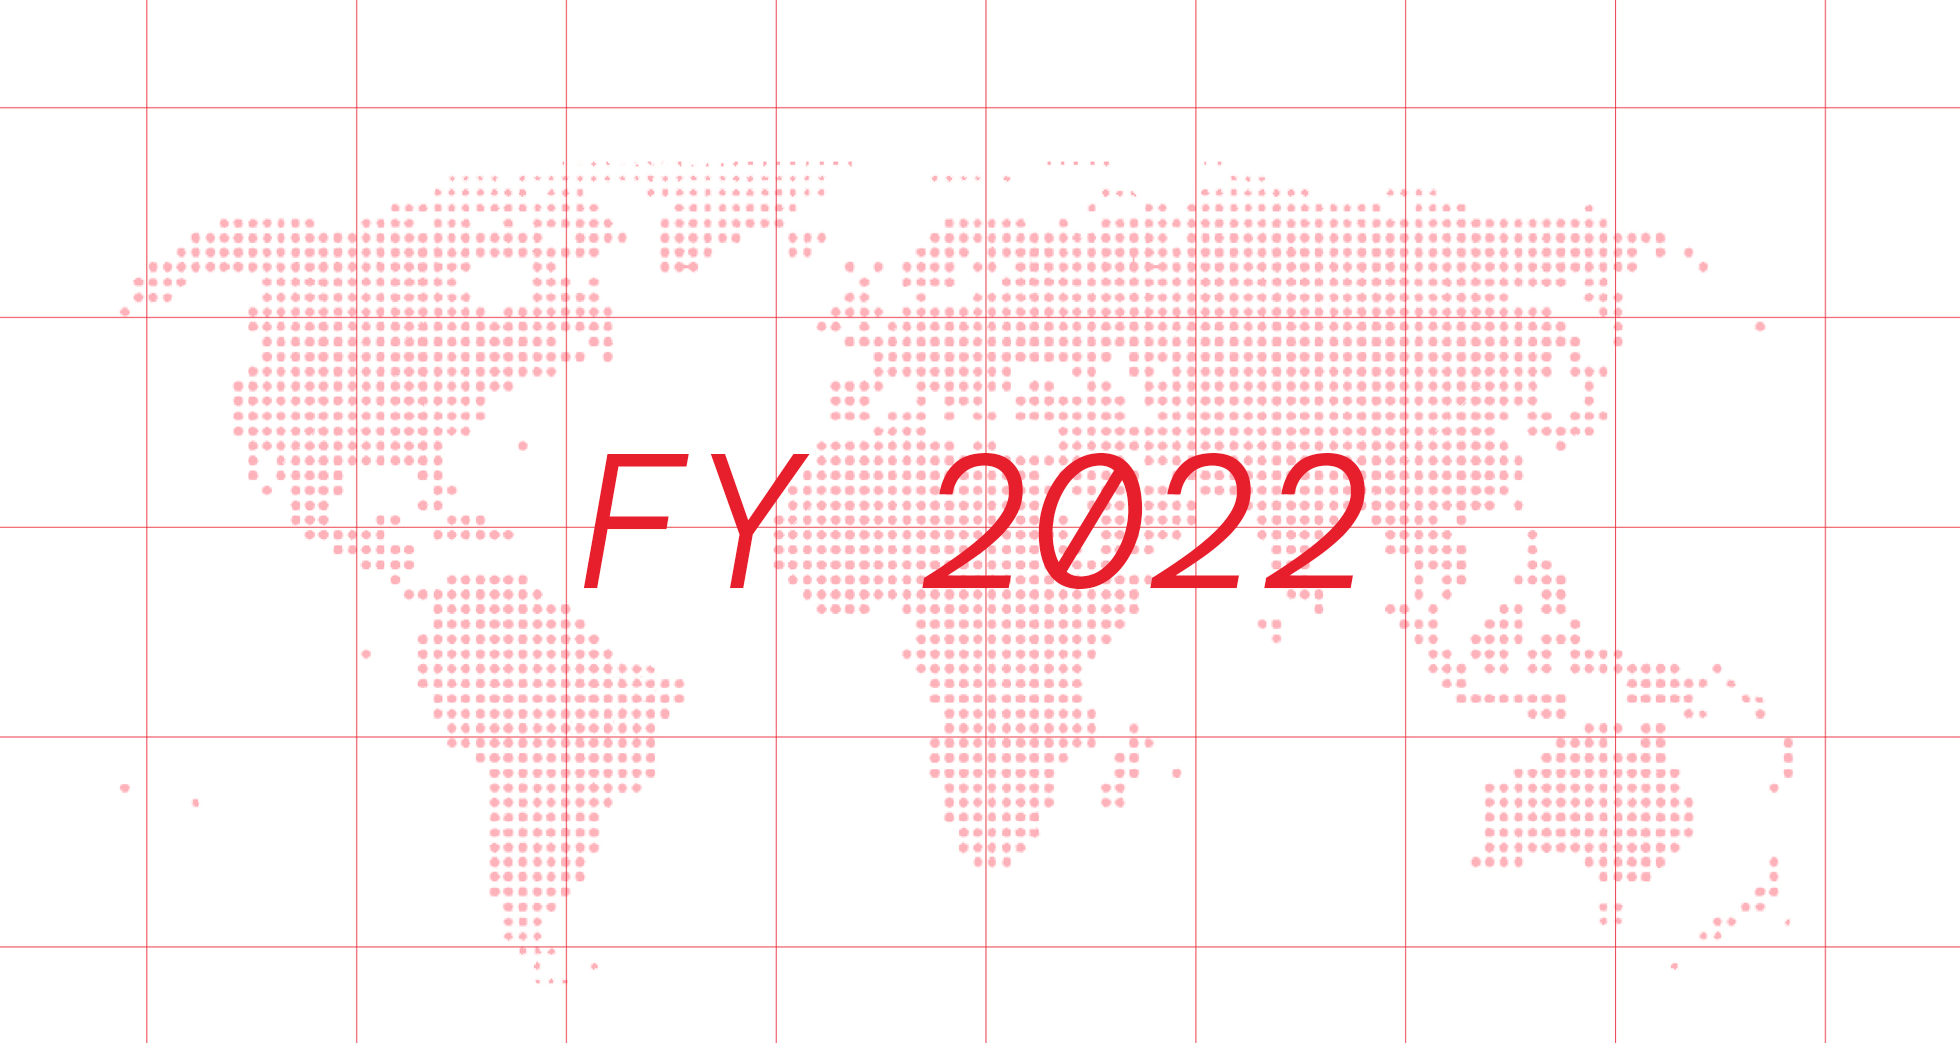 Believe Financial Results - FY 2022